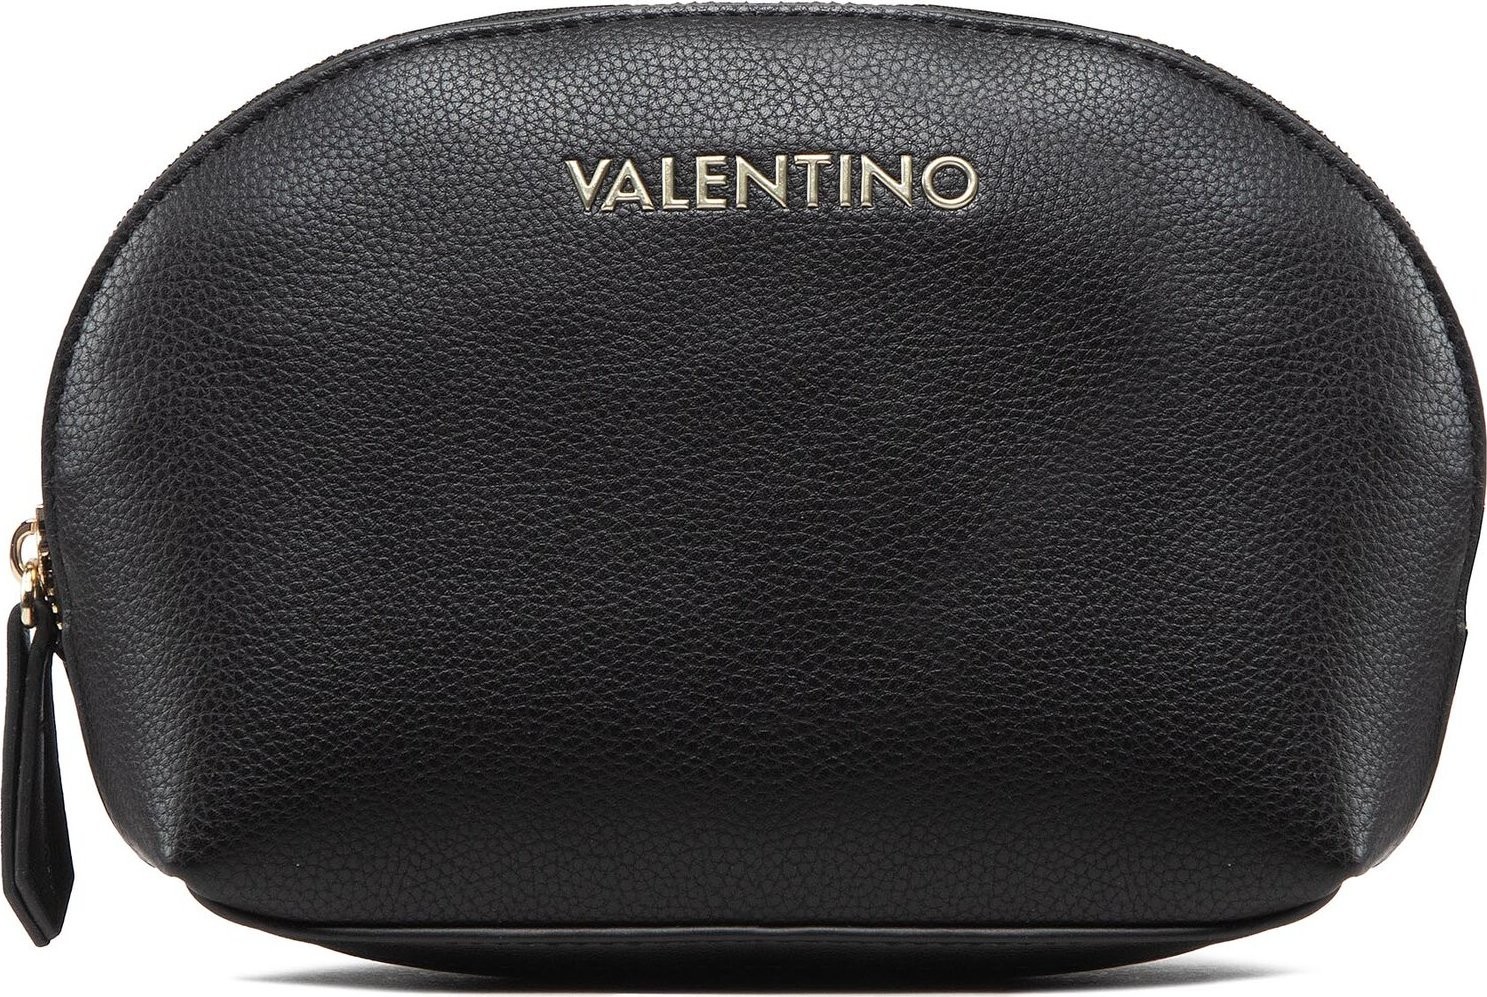 Kosmetický kufřík Valentino Arepa VBE6IQ512 Nero